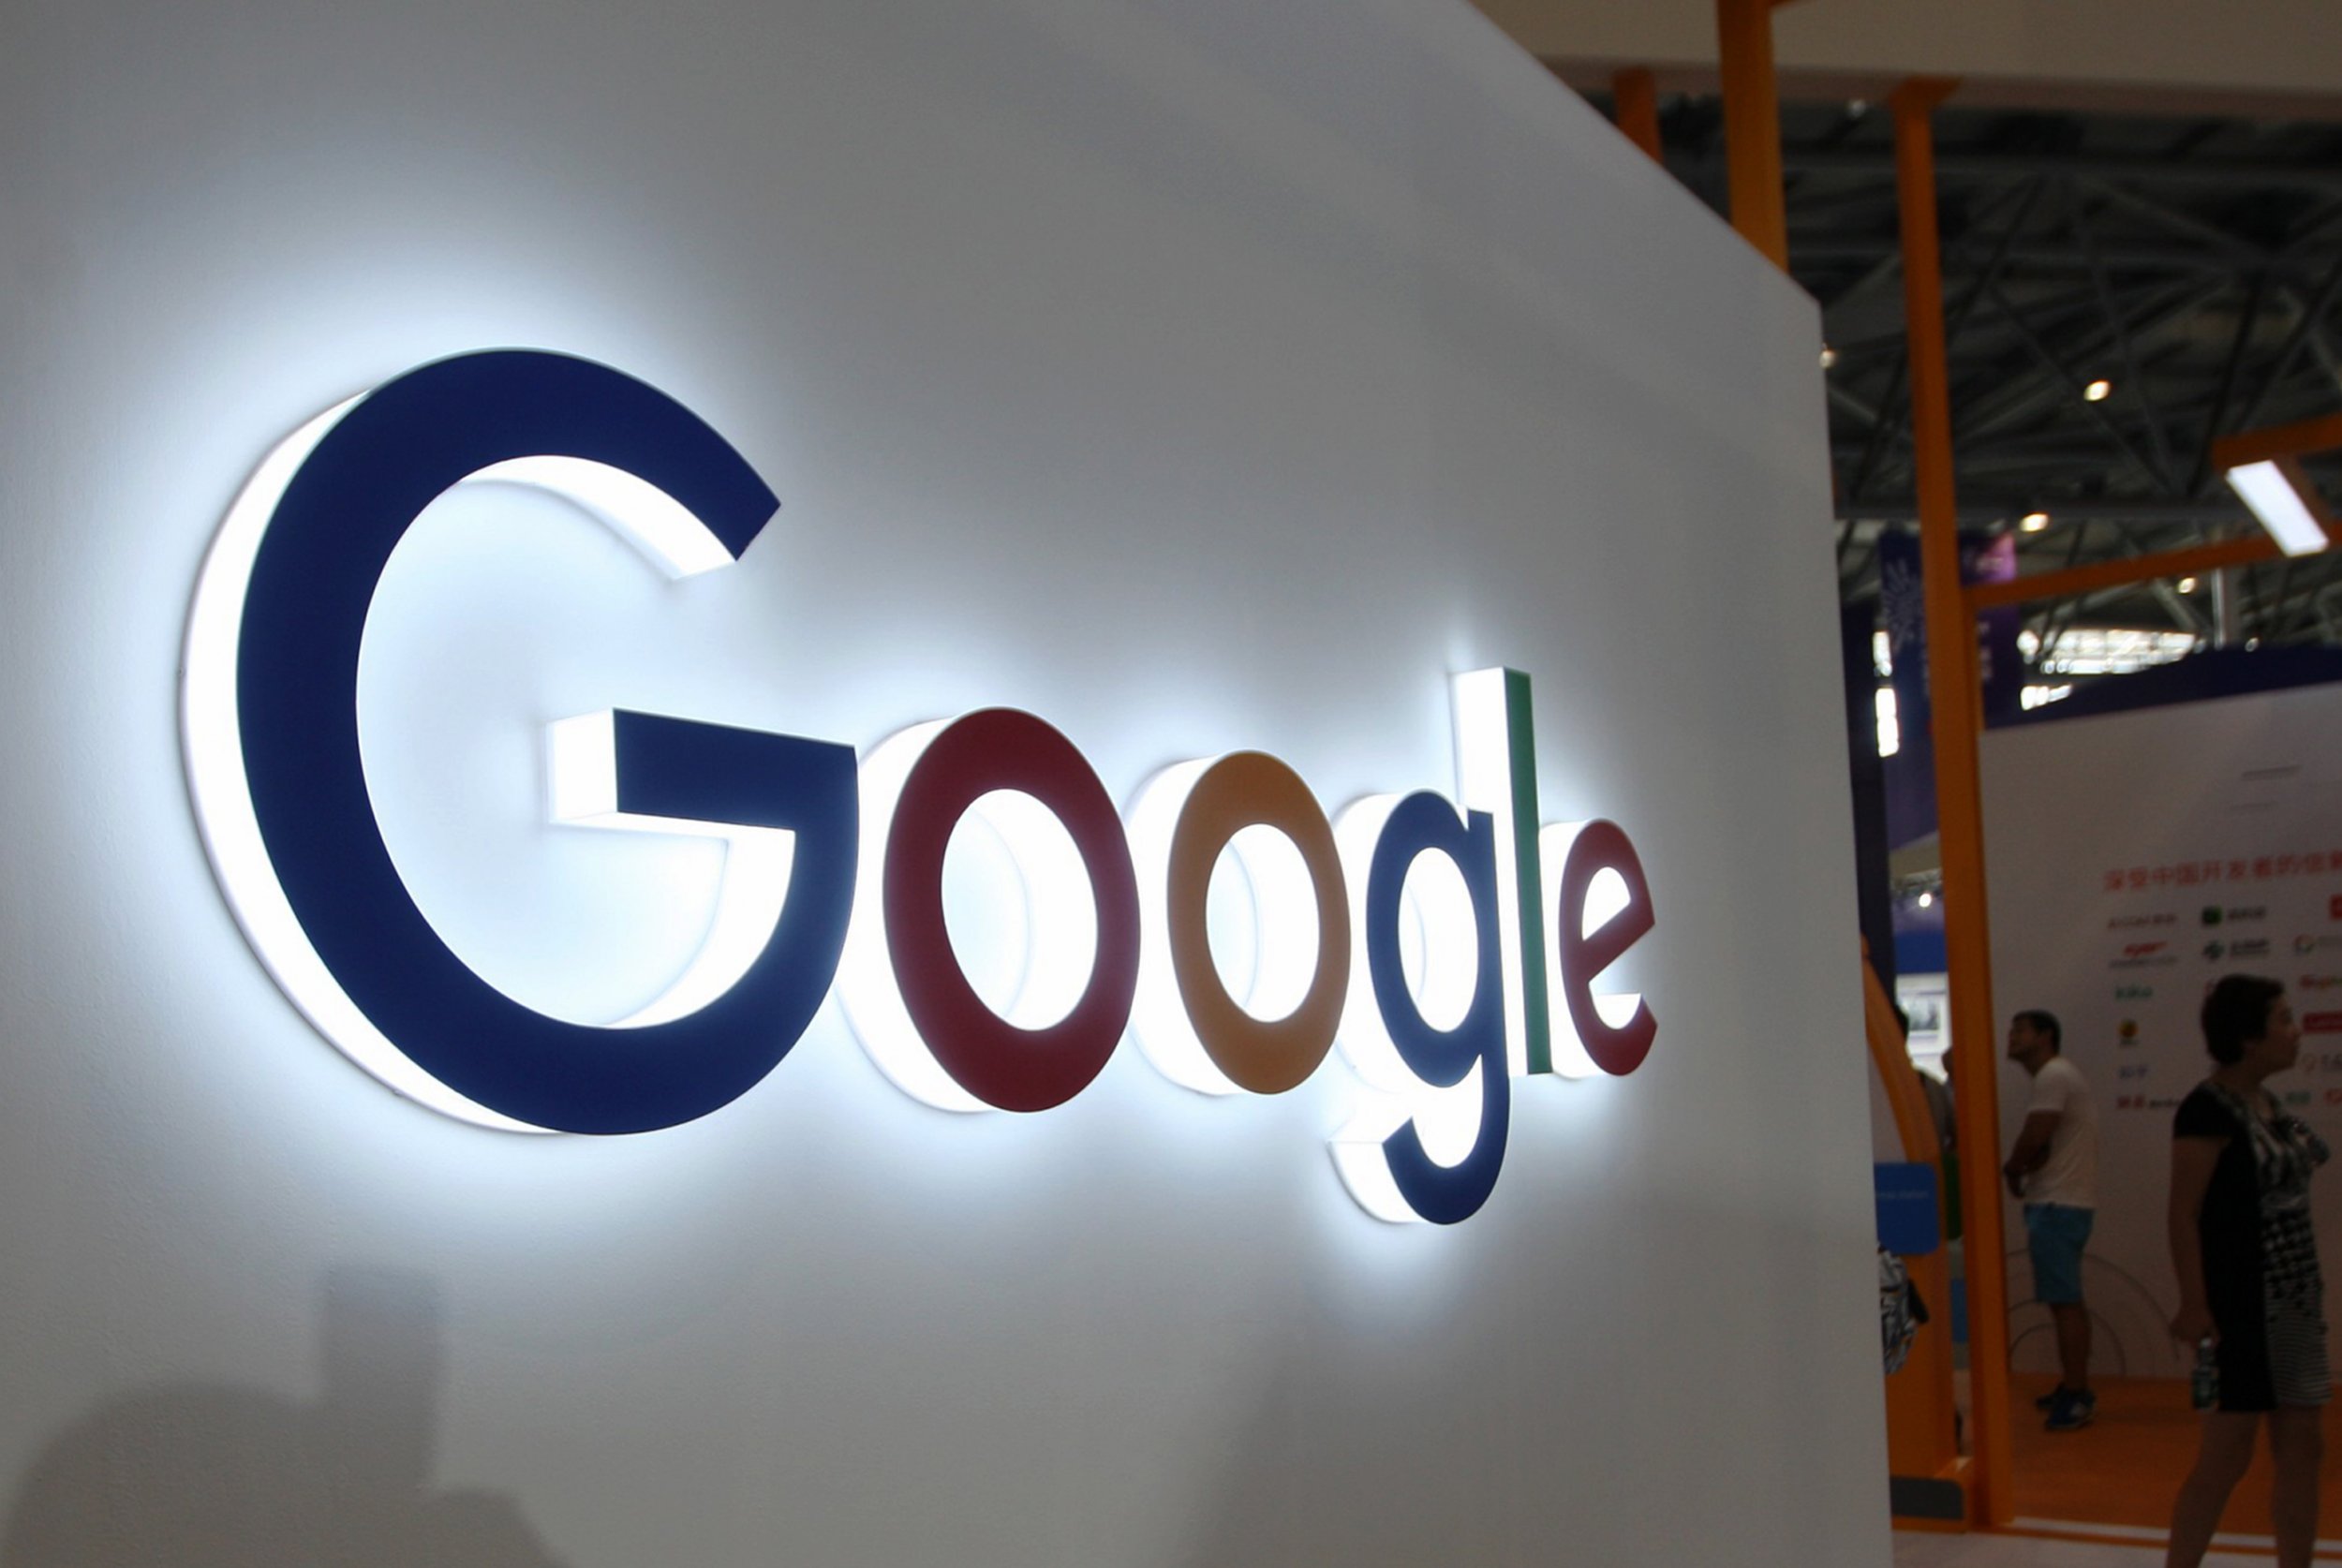 google logo on wall